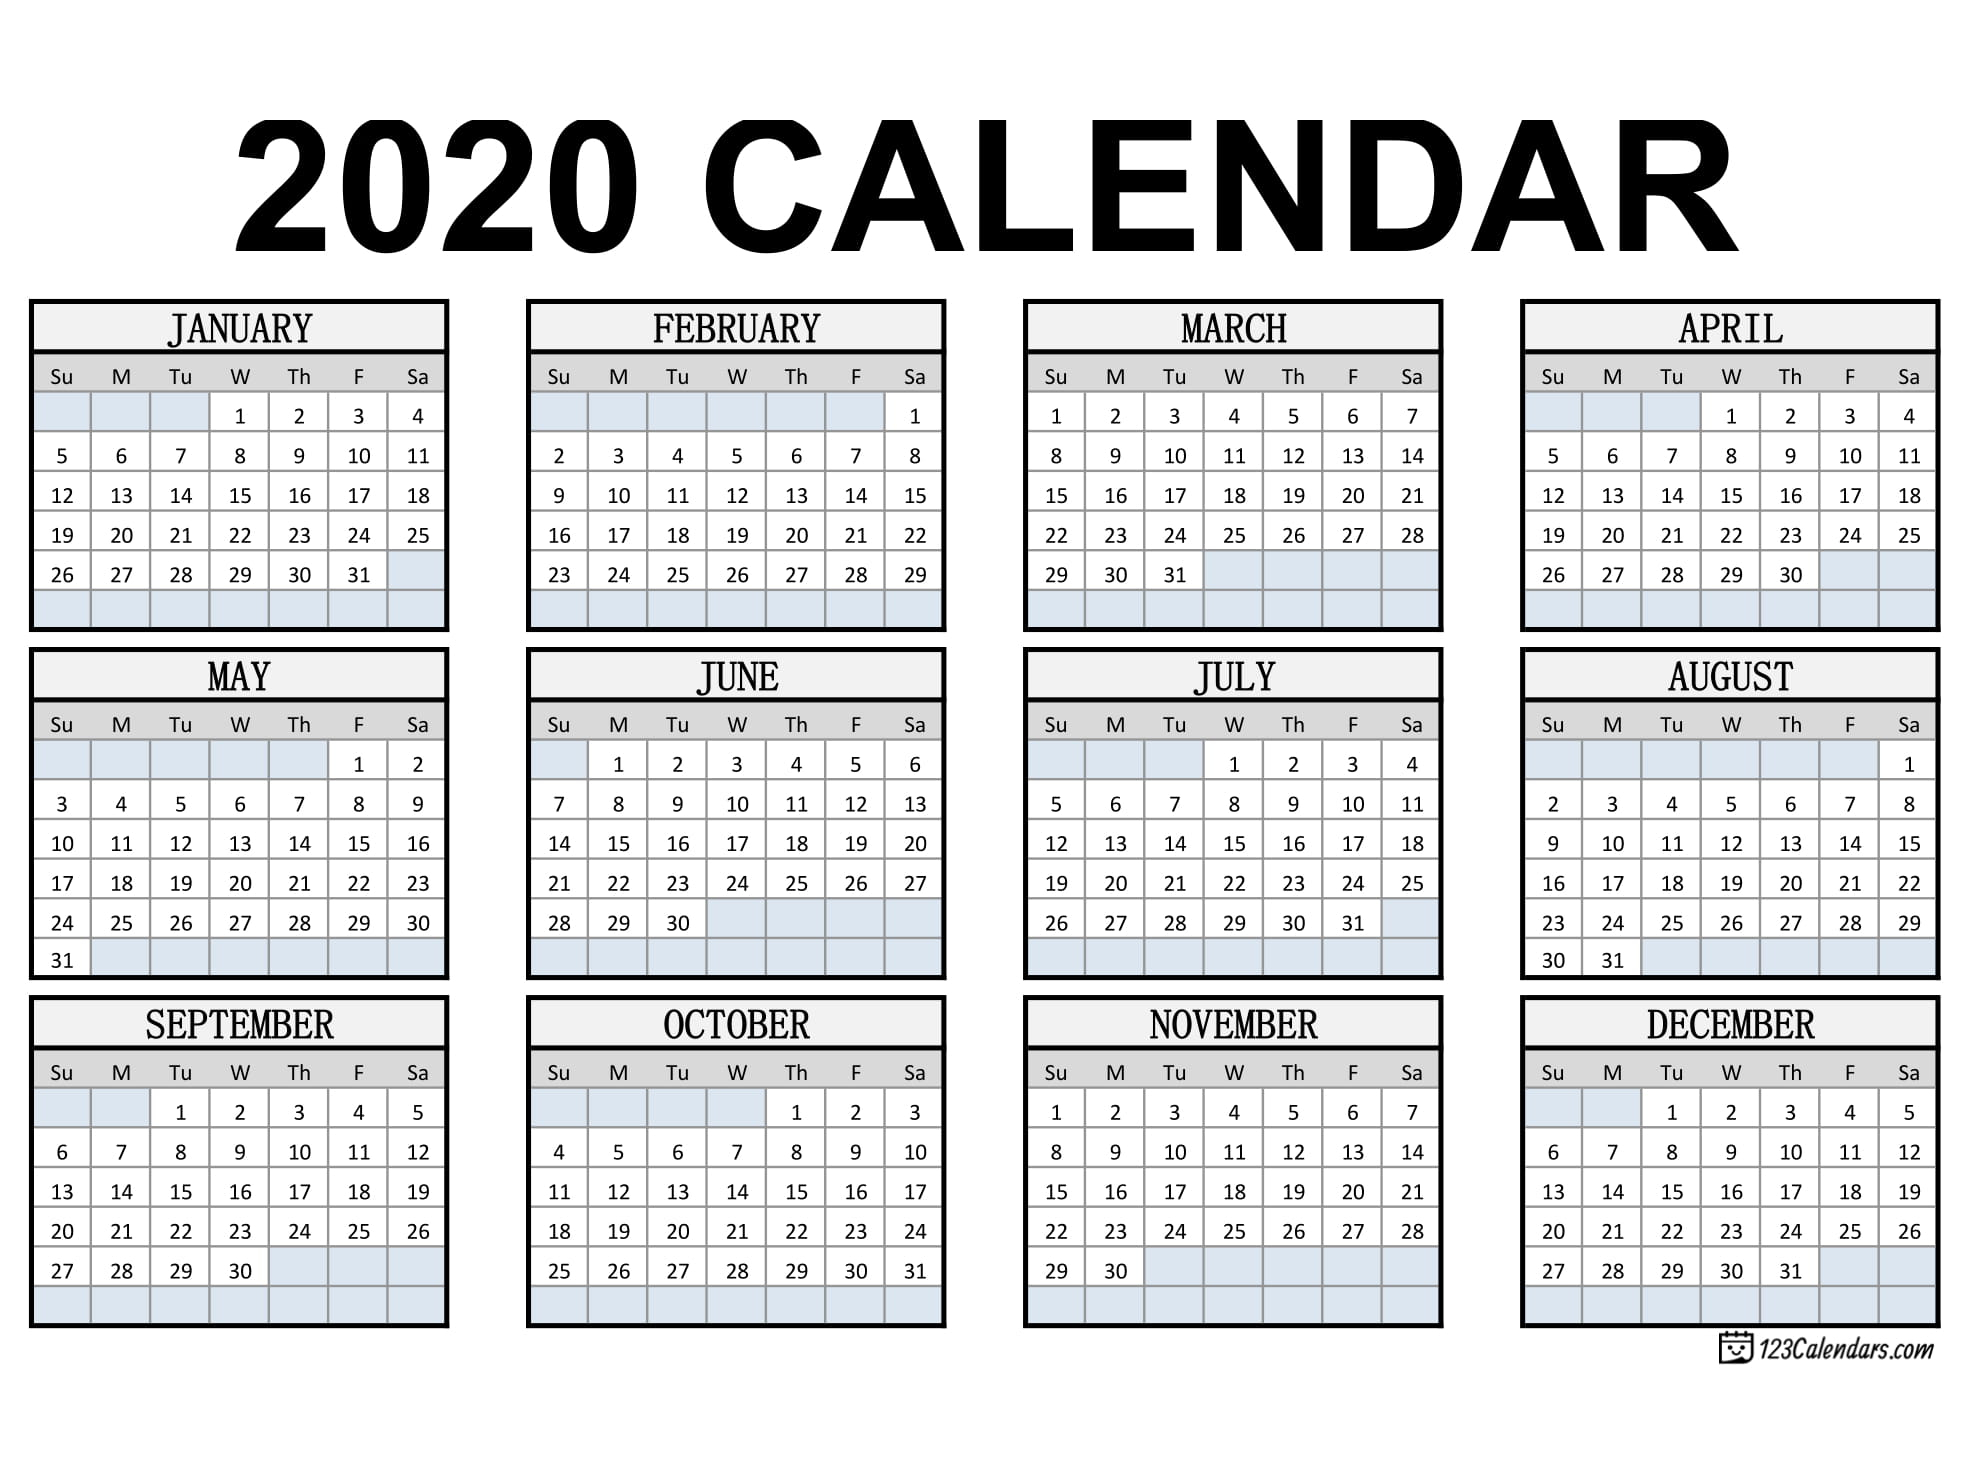 Free Printable 2020 Calendar 123calendars